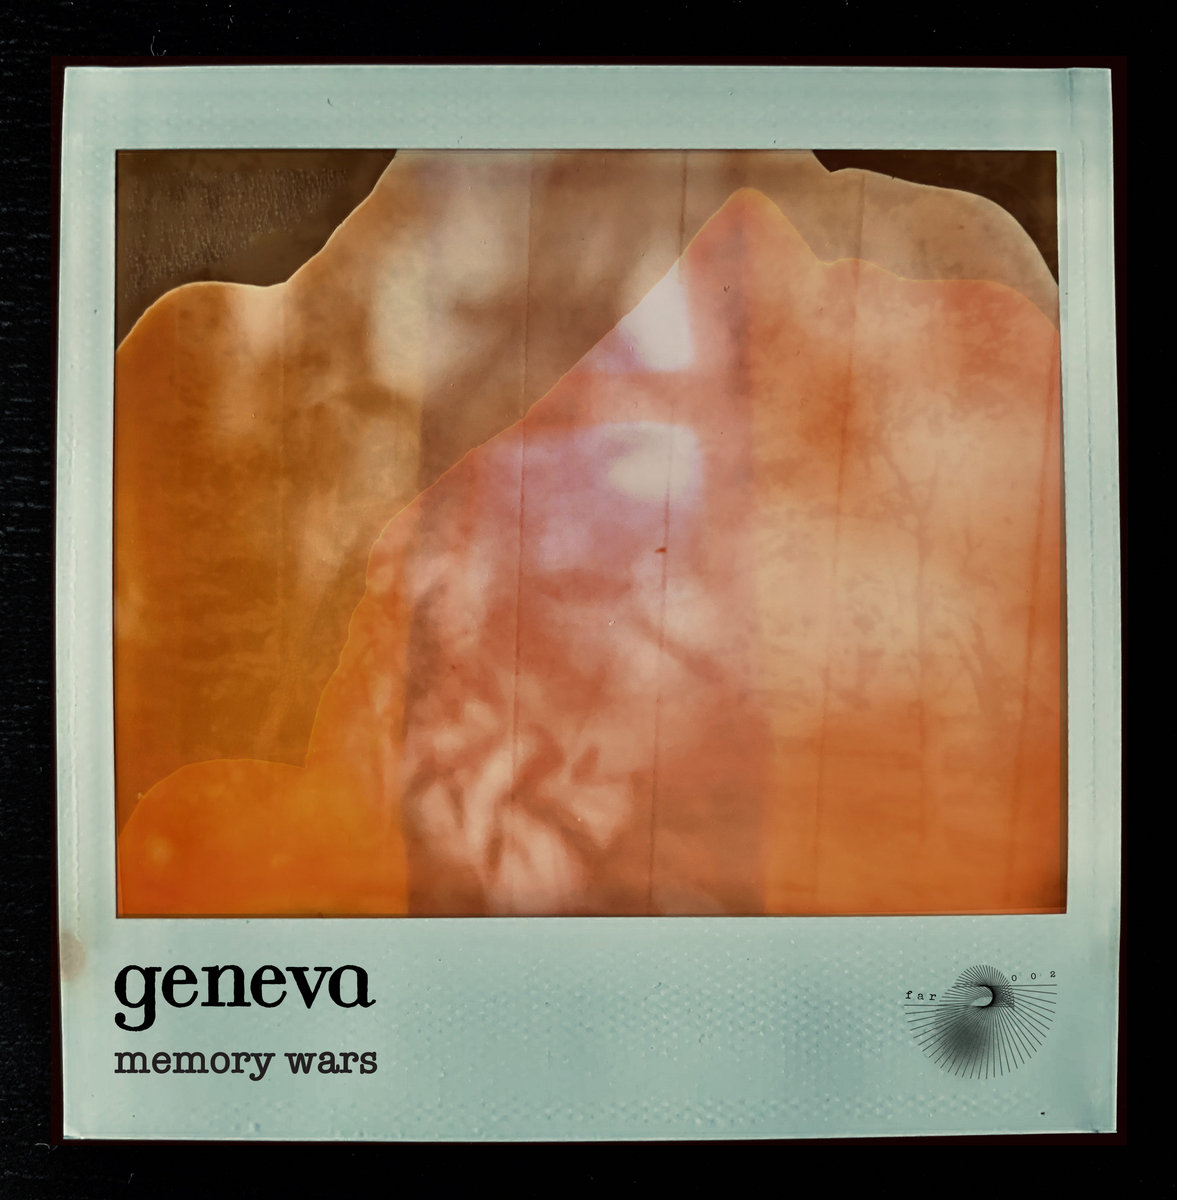 News – Geneva – Memory Wars